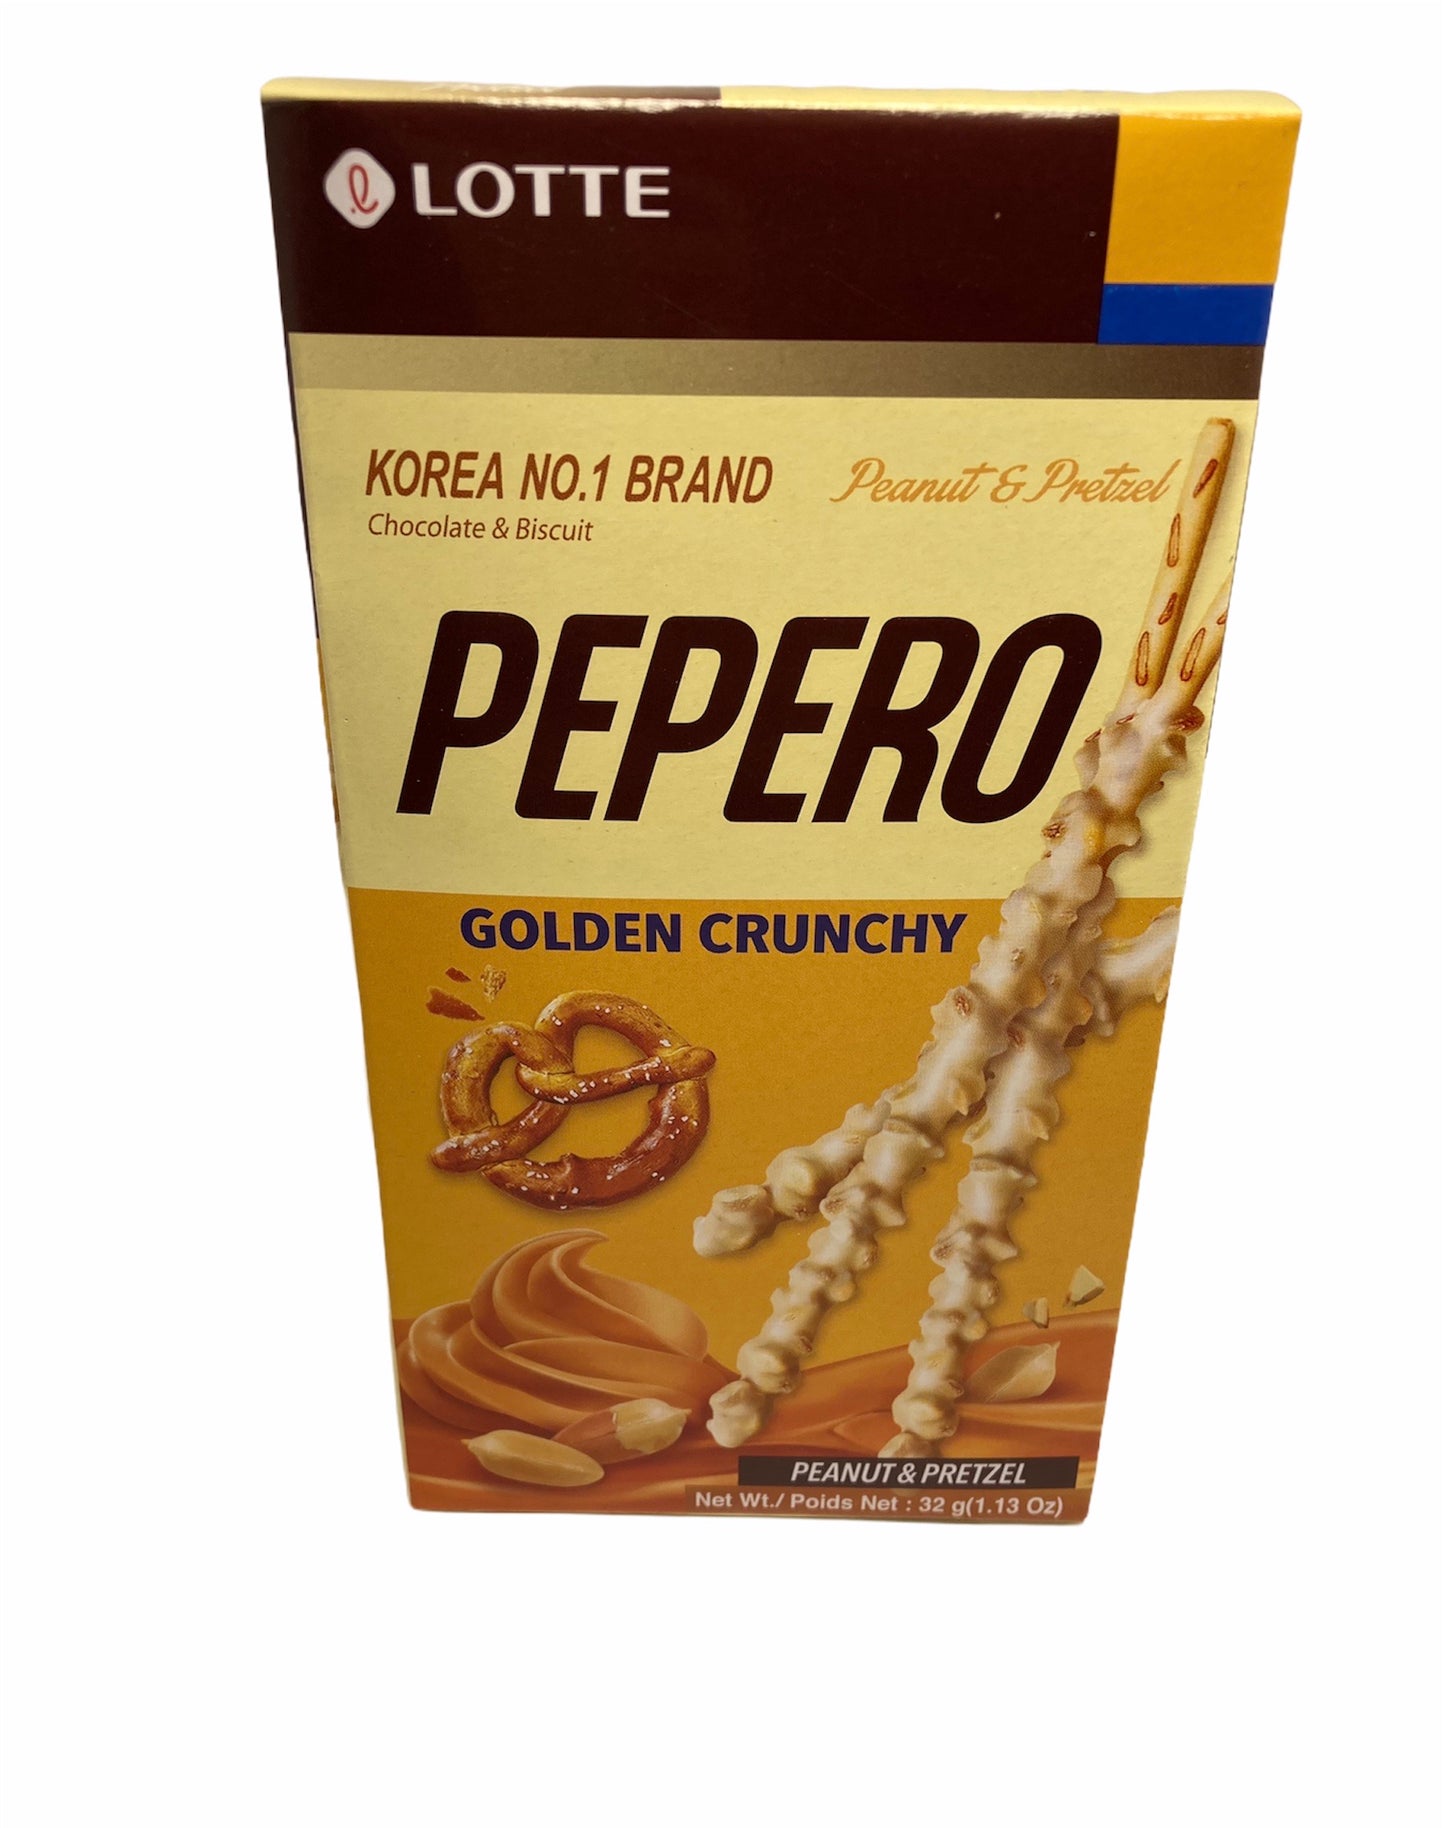 Lotte Pepero Golden Crunchy